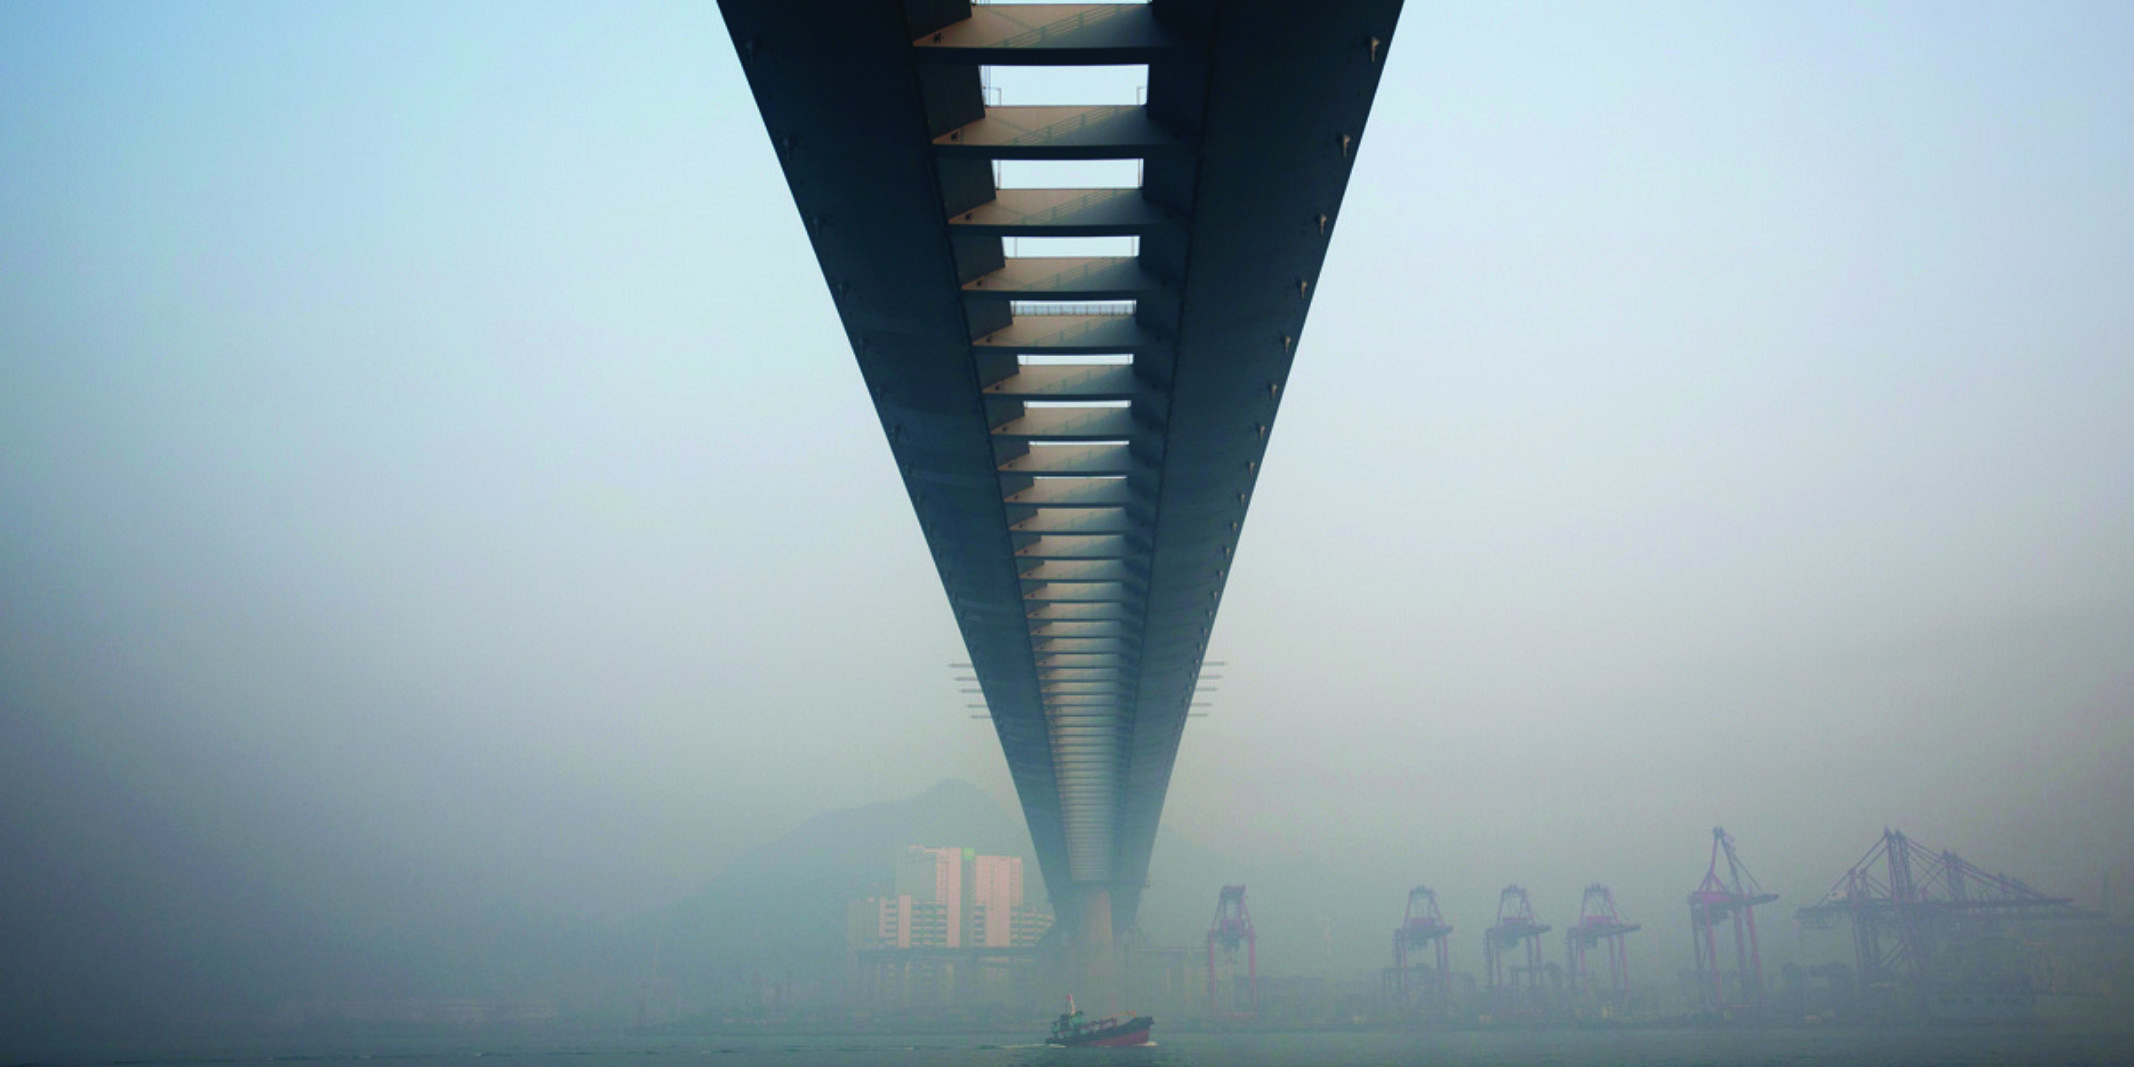 Below a Giant Bridge while foggy